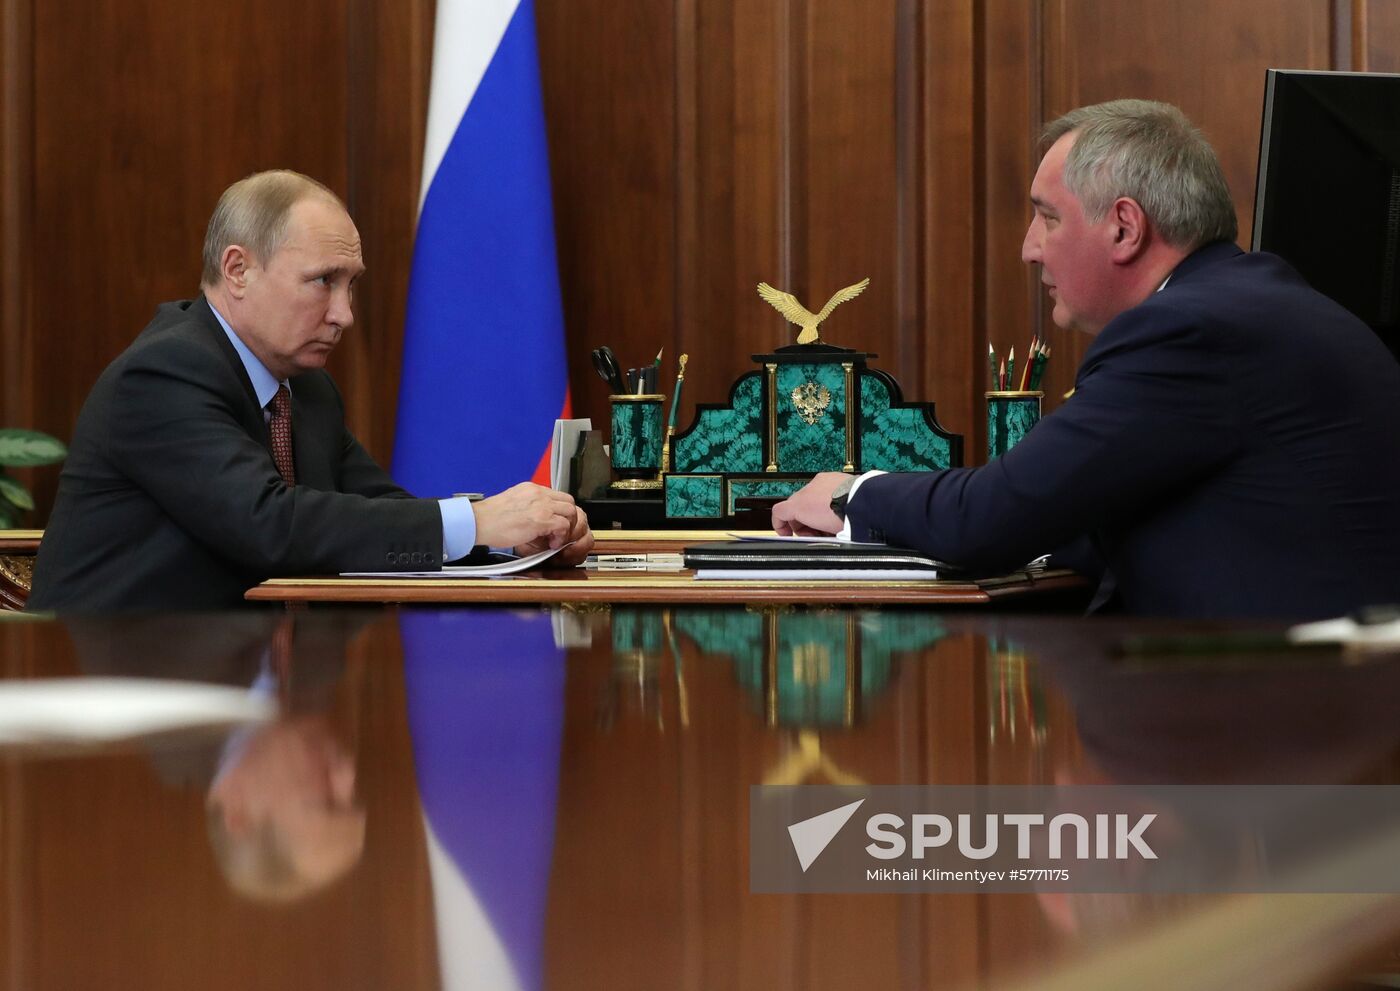 President Putin meets with Roscosmos Director Rogozin